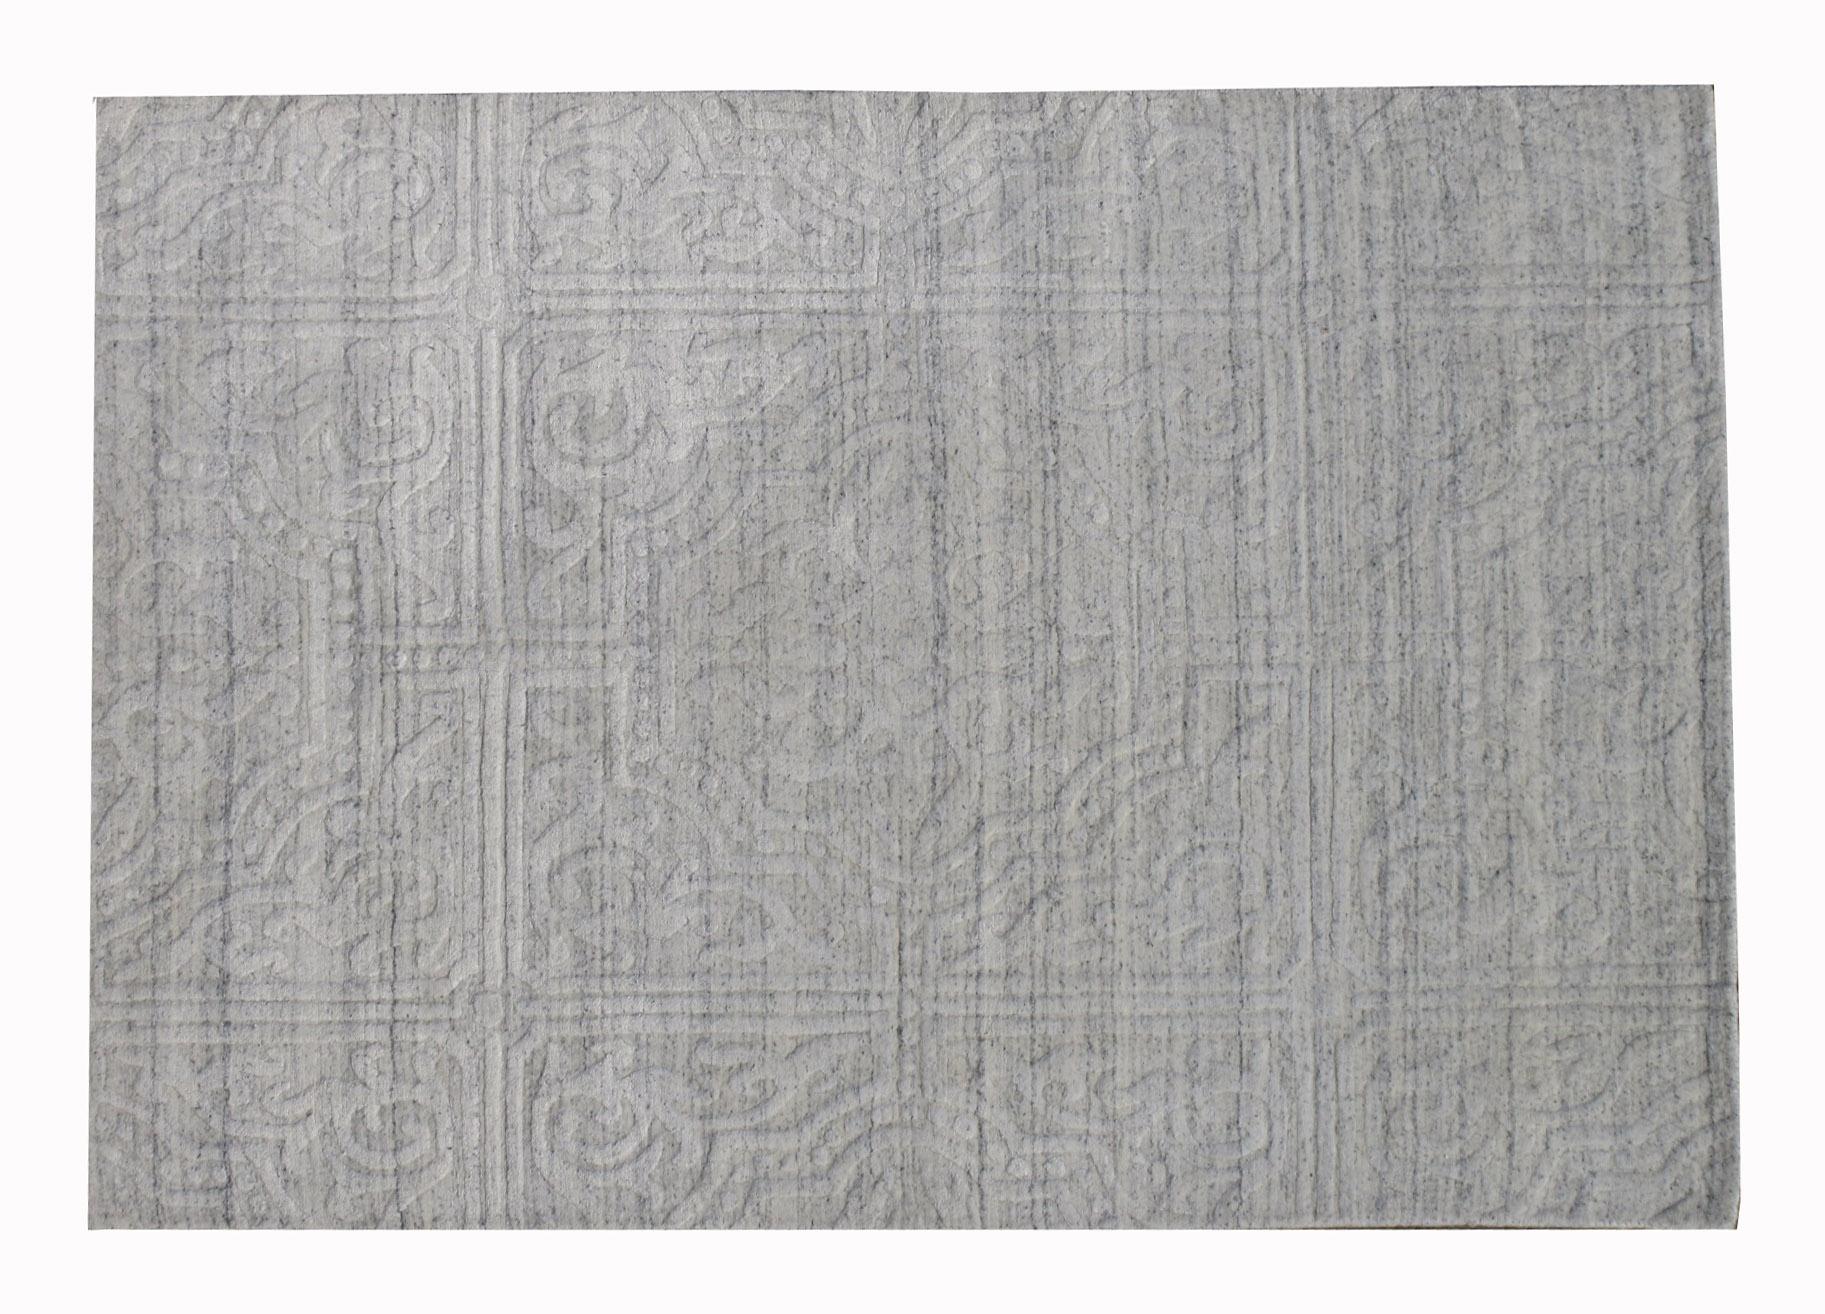 Handmade, high-low silk pile on a cotton foundation.

Modern trellis design.

Dimensions: 4' x 5'11